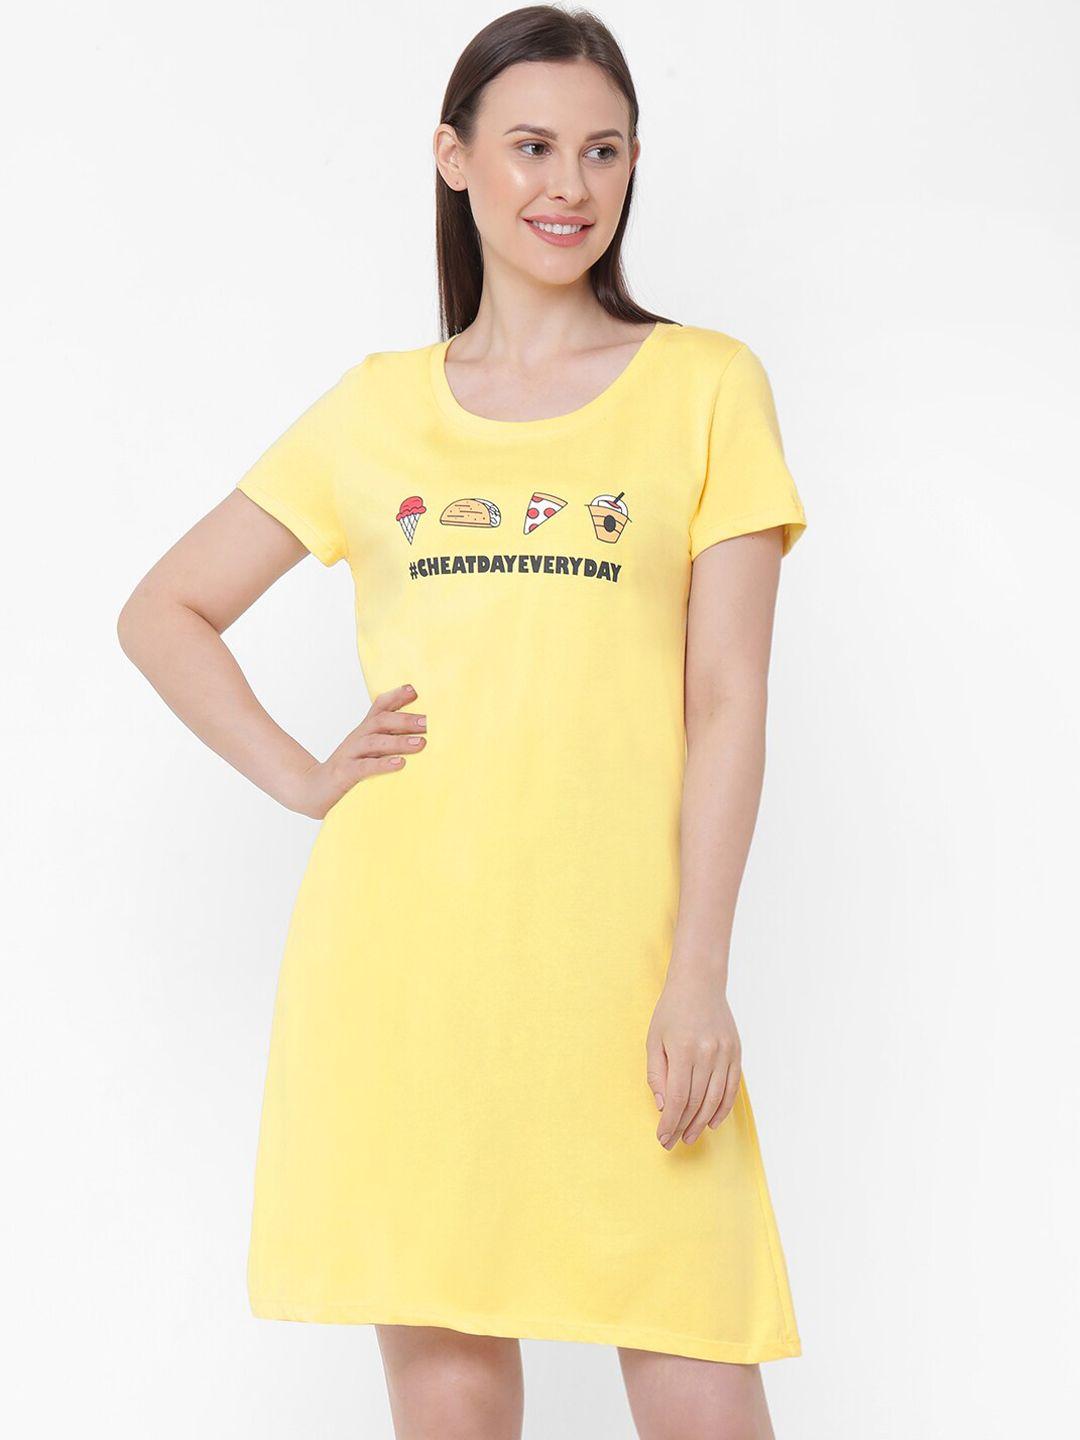 soie women yellow & black printed sleep shirt